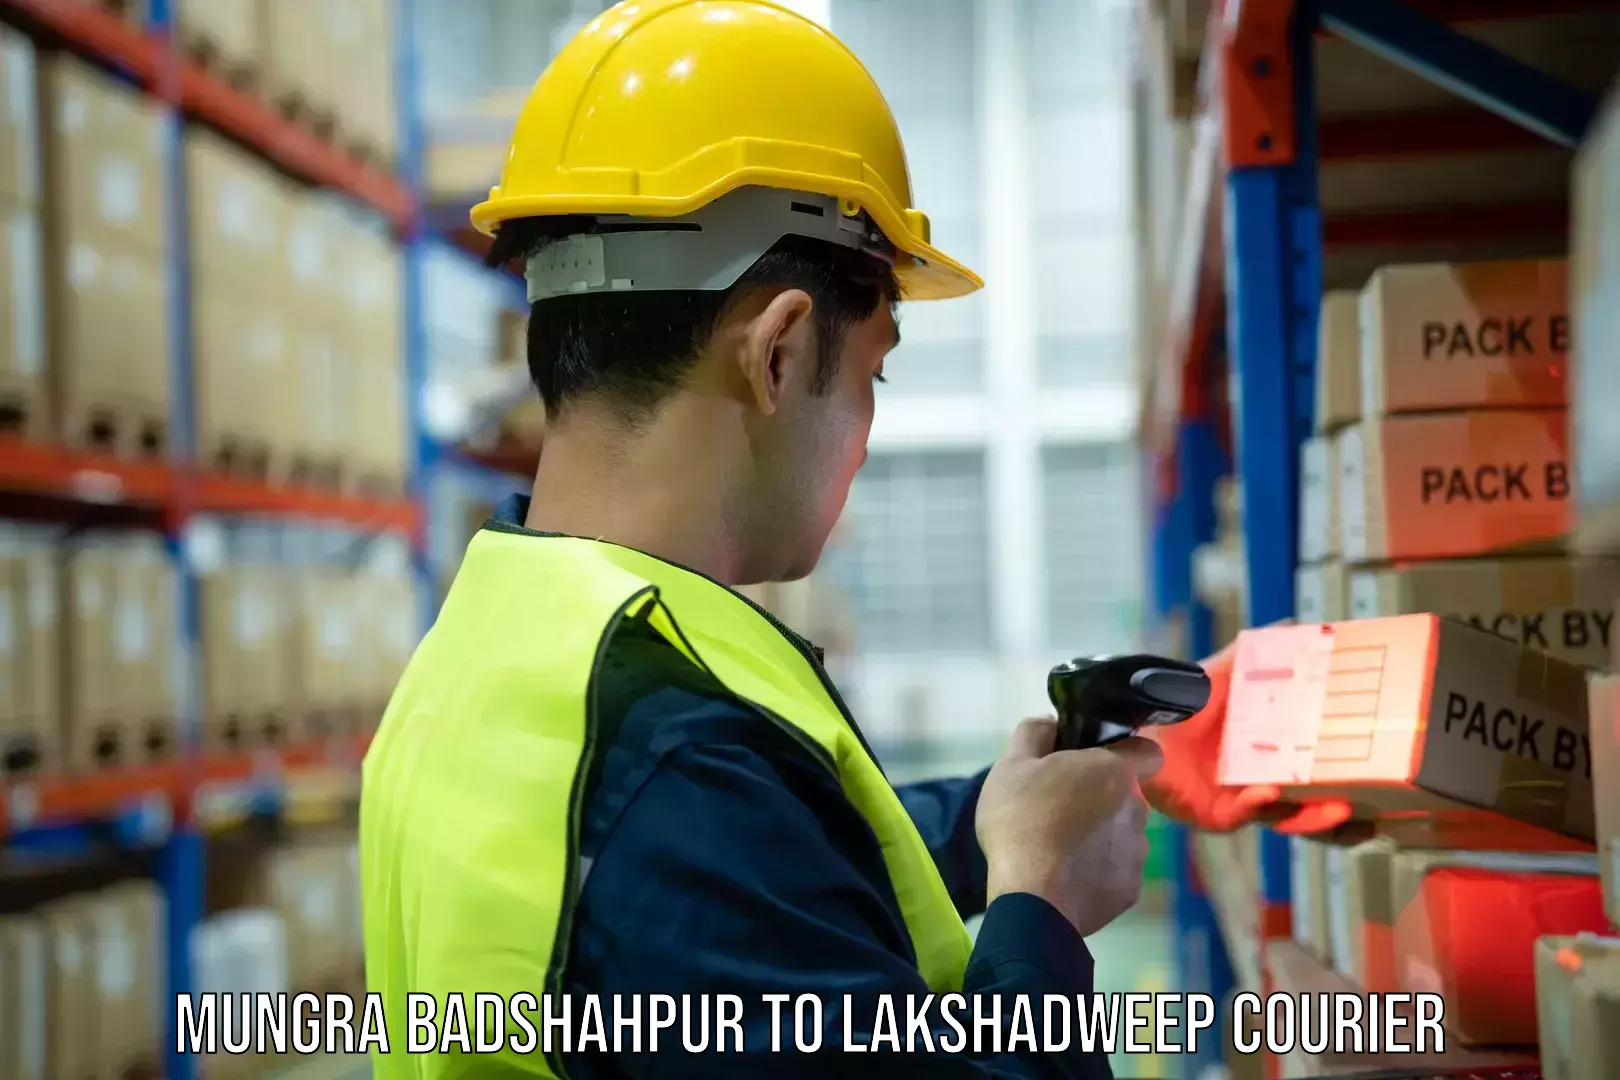 Courier service comparison Mungra Badshahpur to Lakshadweep